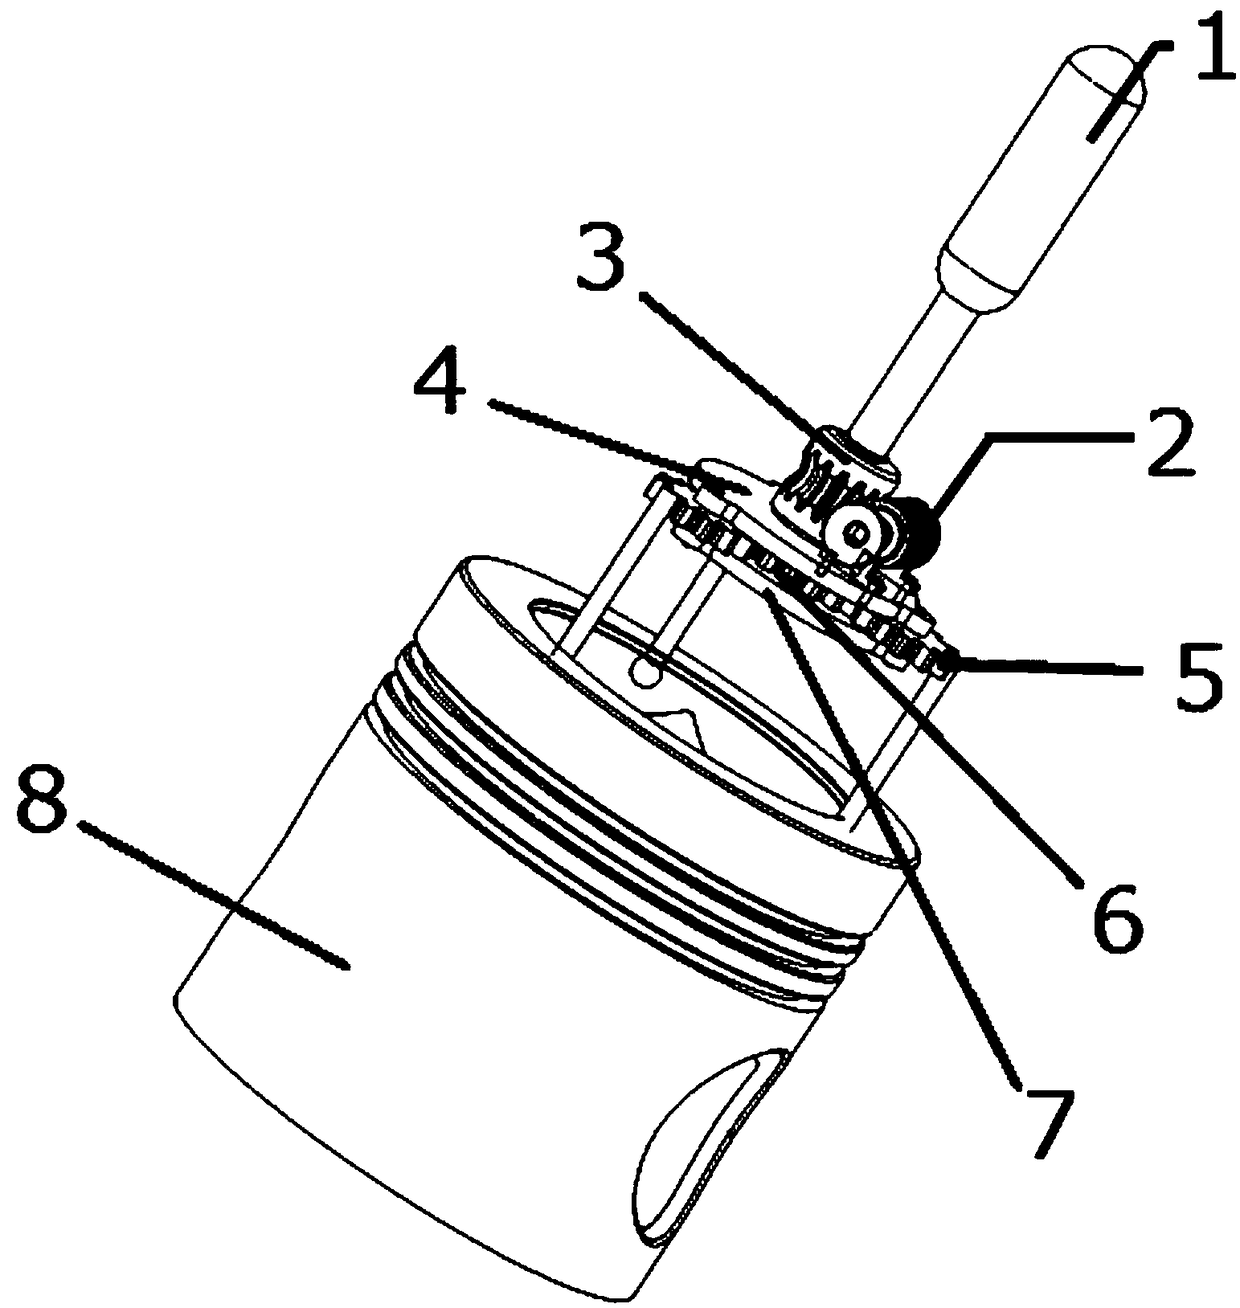 Tool for detaching piston and piston detaching method